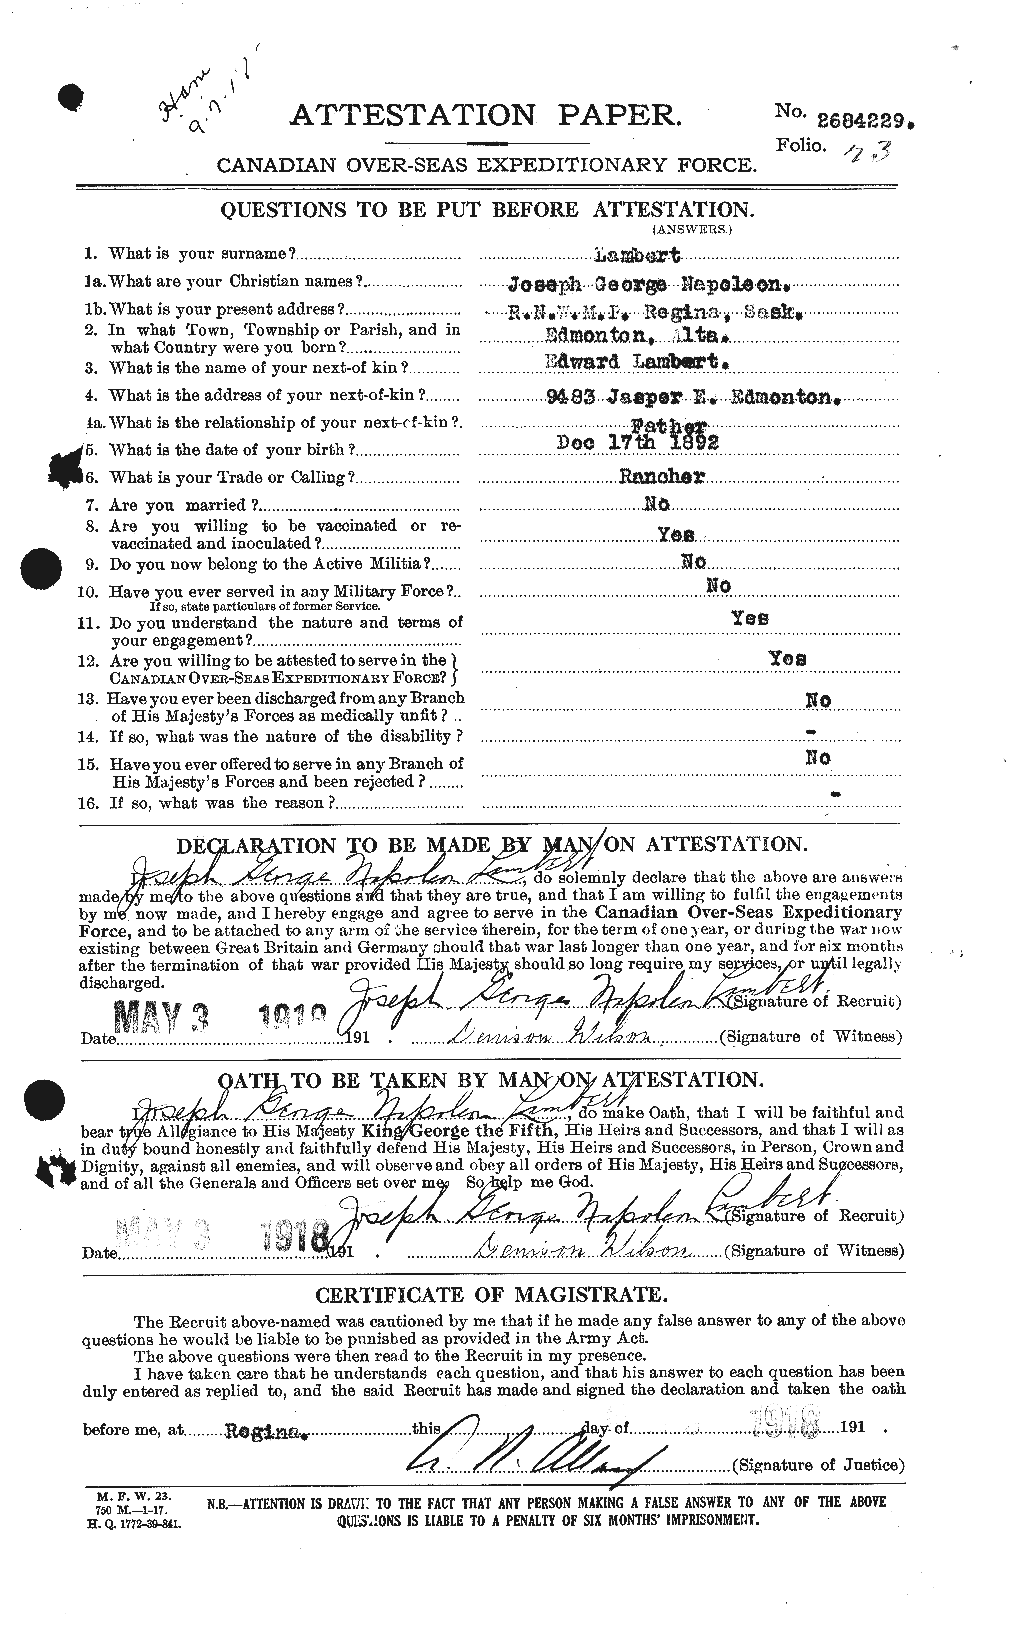 Attestation record: Joseph George Napoleon Lambert